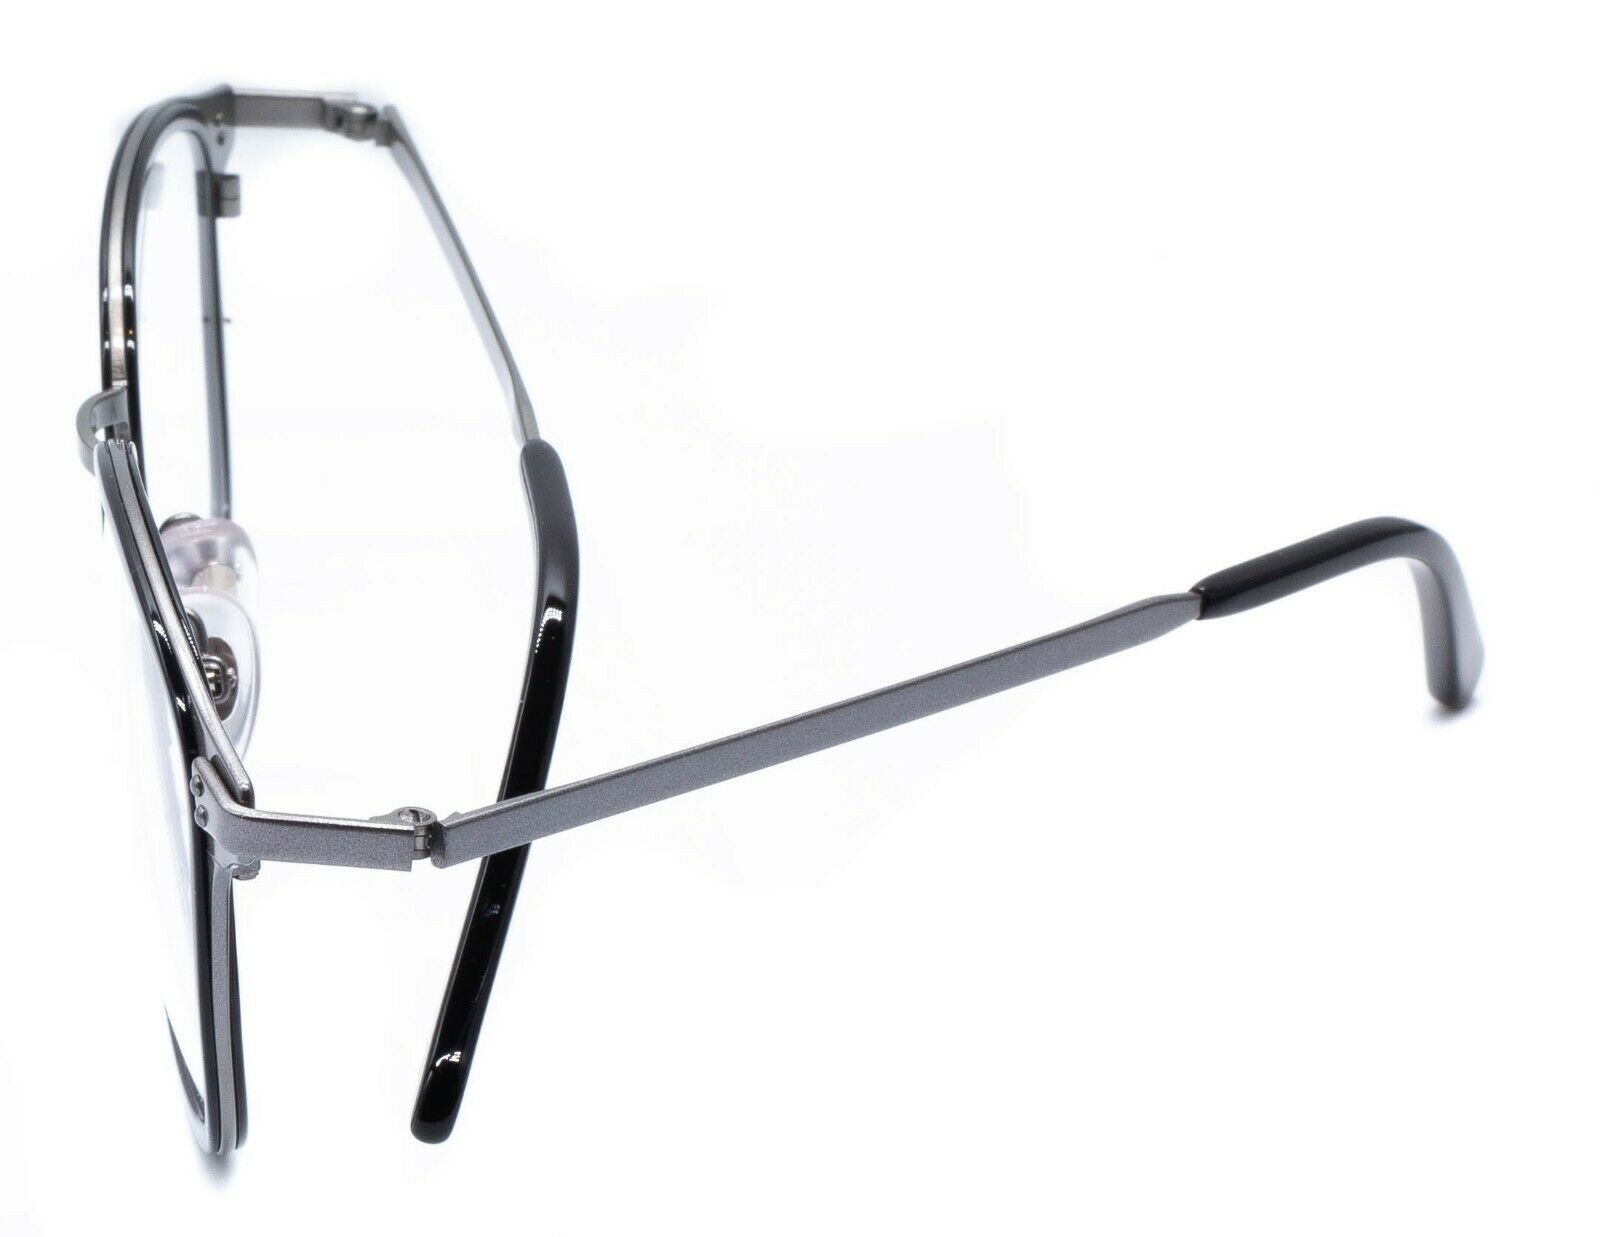 RETROSUPERFUTURE NDC/R Numero 21 Fucile SP17 51mm Eyewear Glasses RX Optical